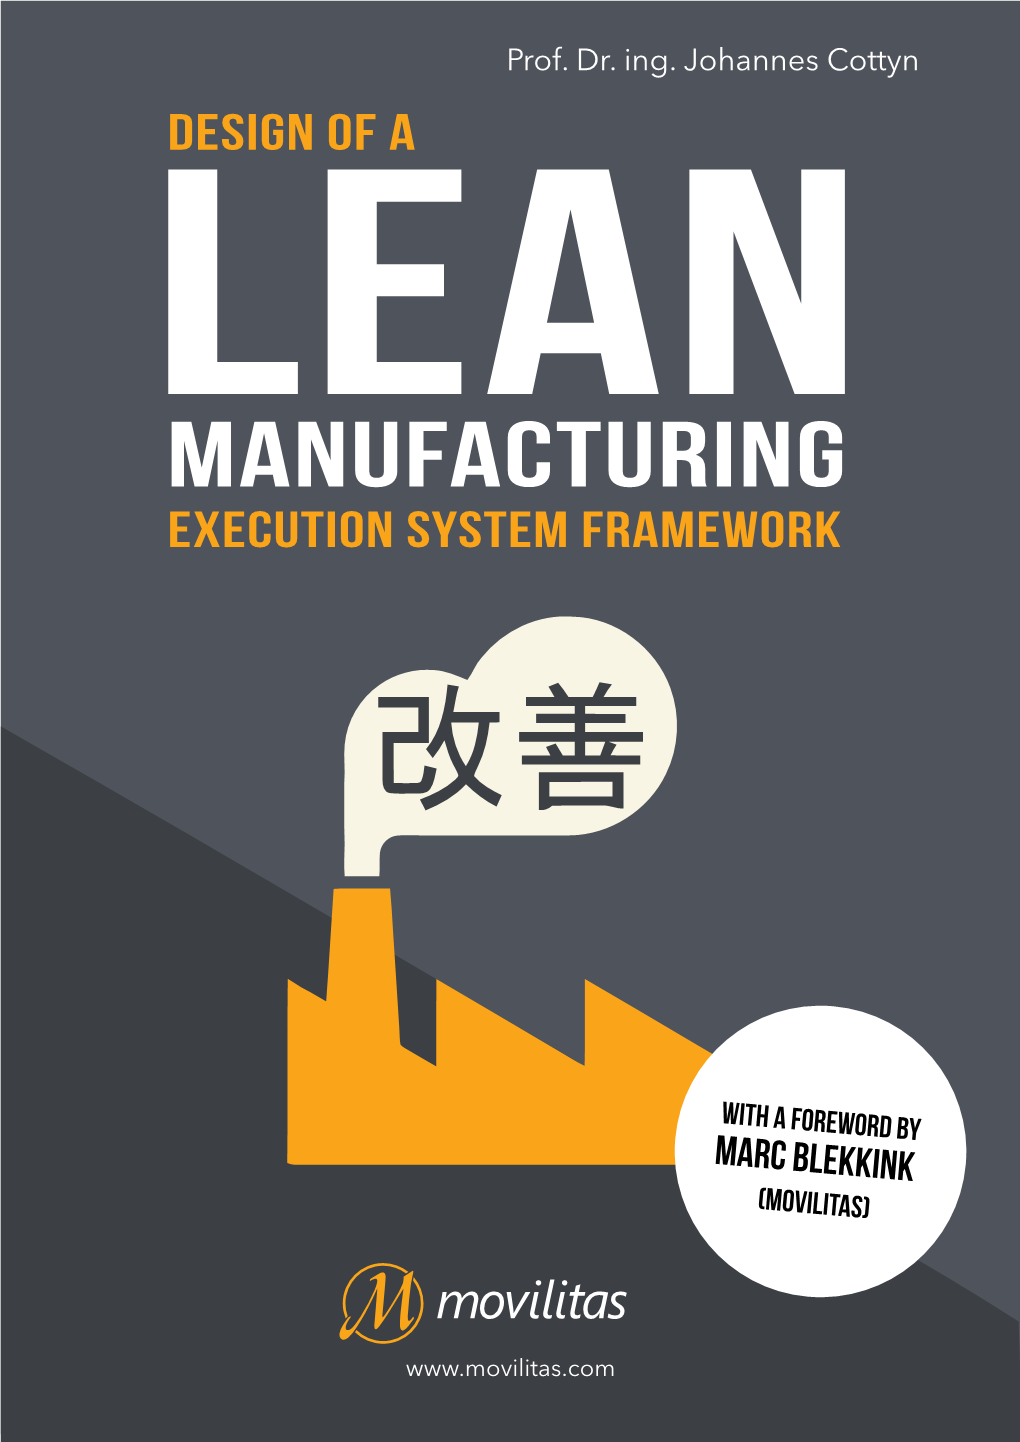 Manufacturing Execution System Framework